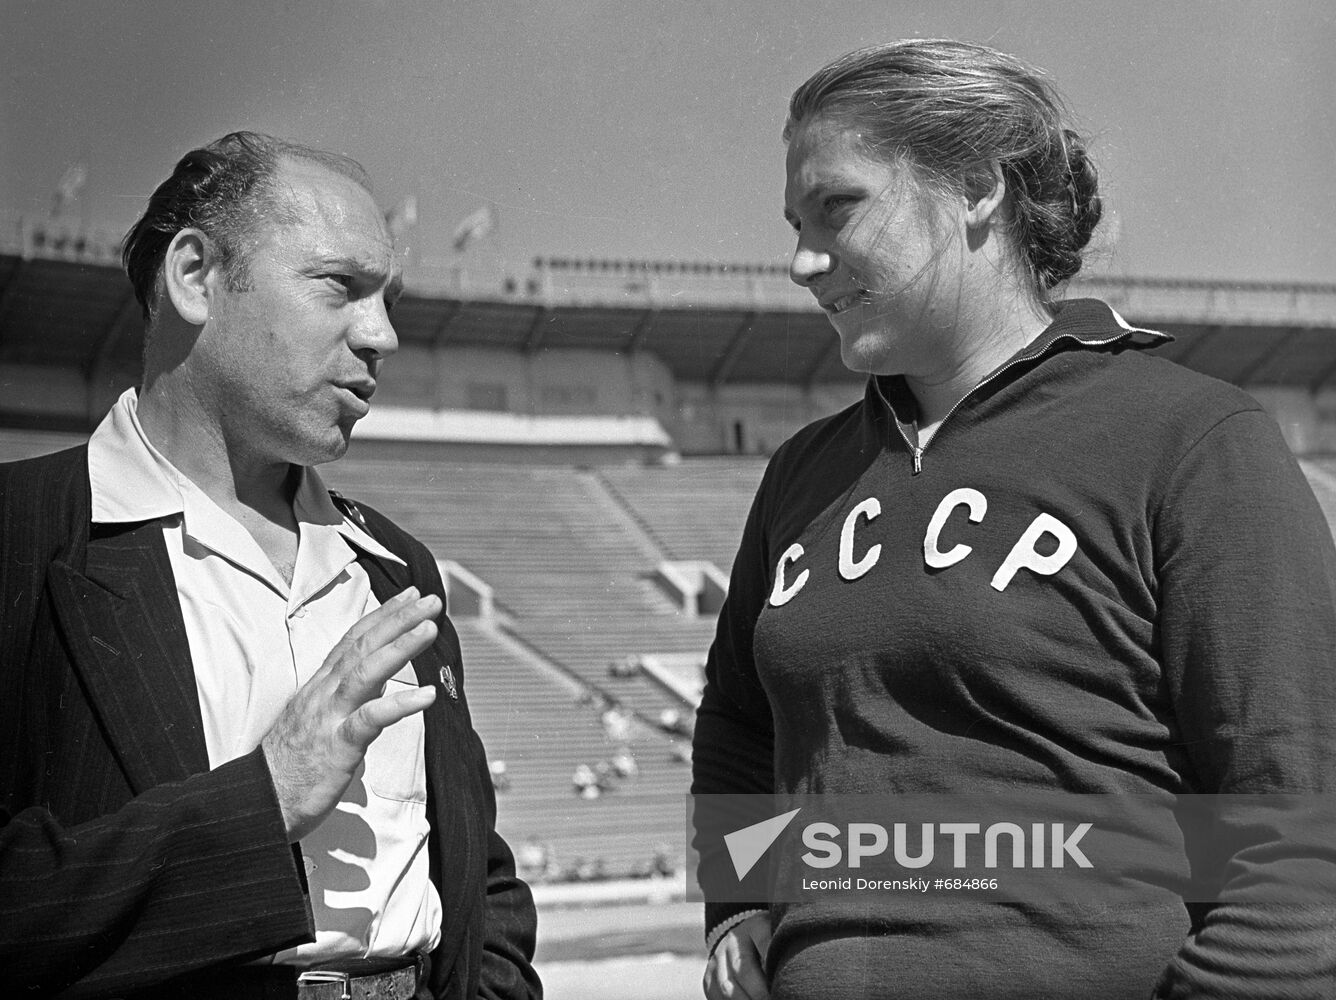 Athlete Tamara Press and coach Vitaly Alexeev